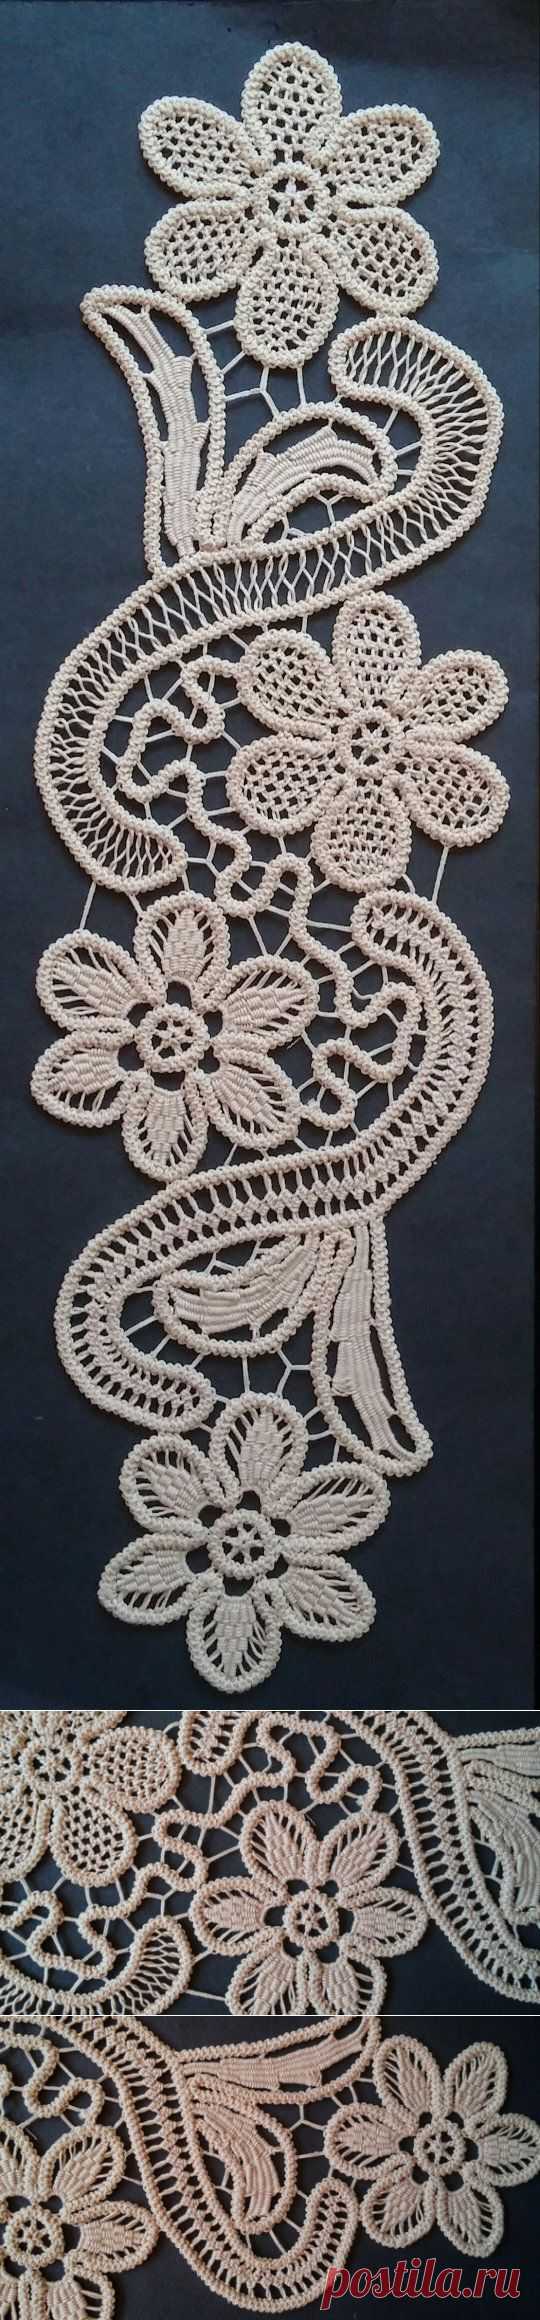 Point Lace Romanian Style Crochet Doily Tan Floral by ValeriasShop